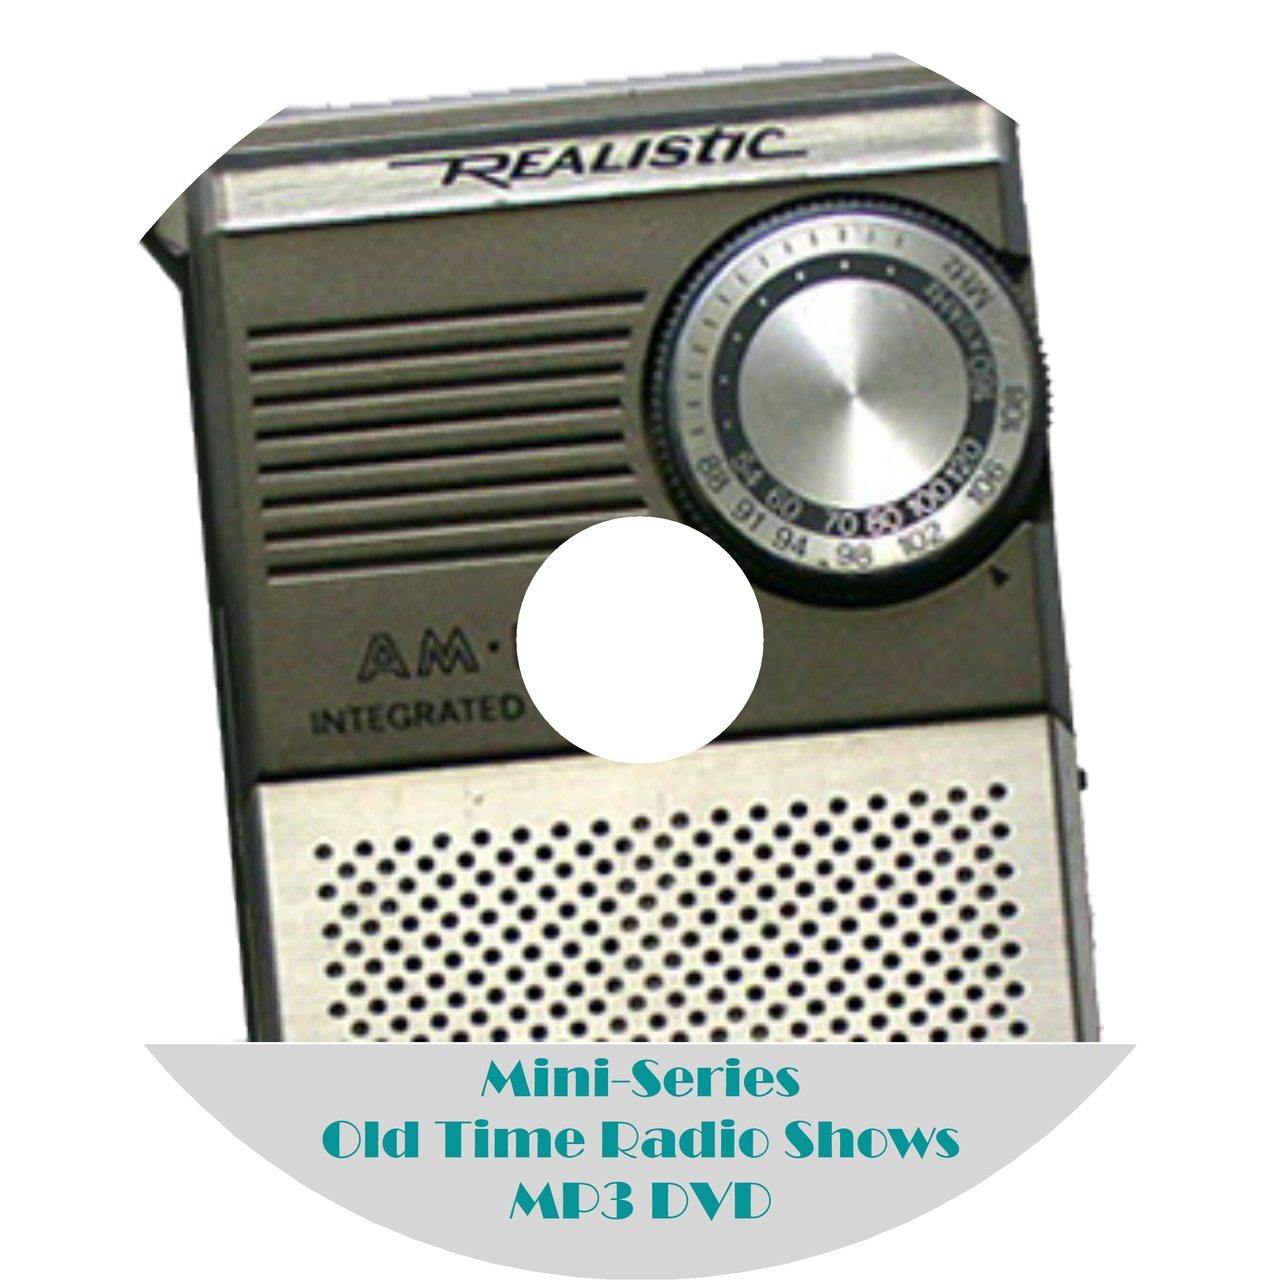 Mini-Series Old Time Radio Shows 179 Episodes On MP3 DVD - OTR World